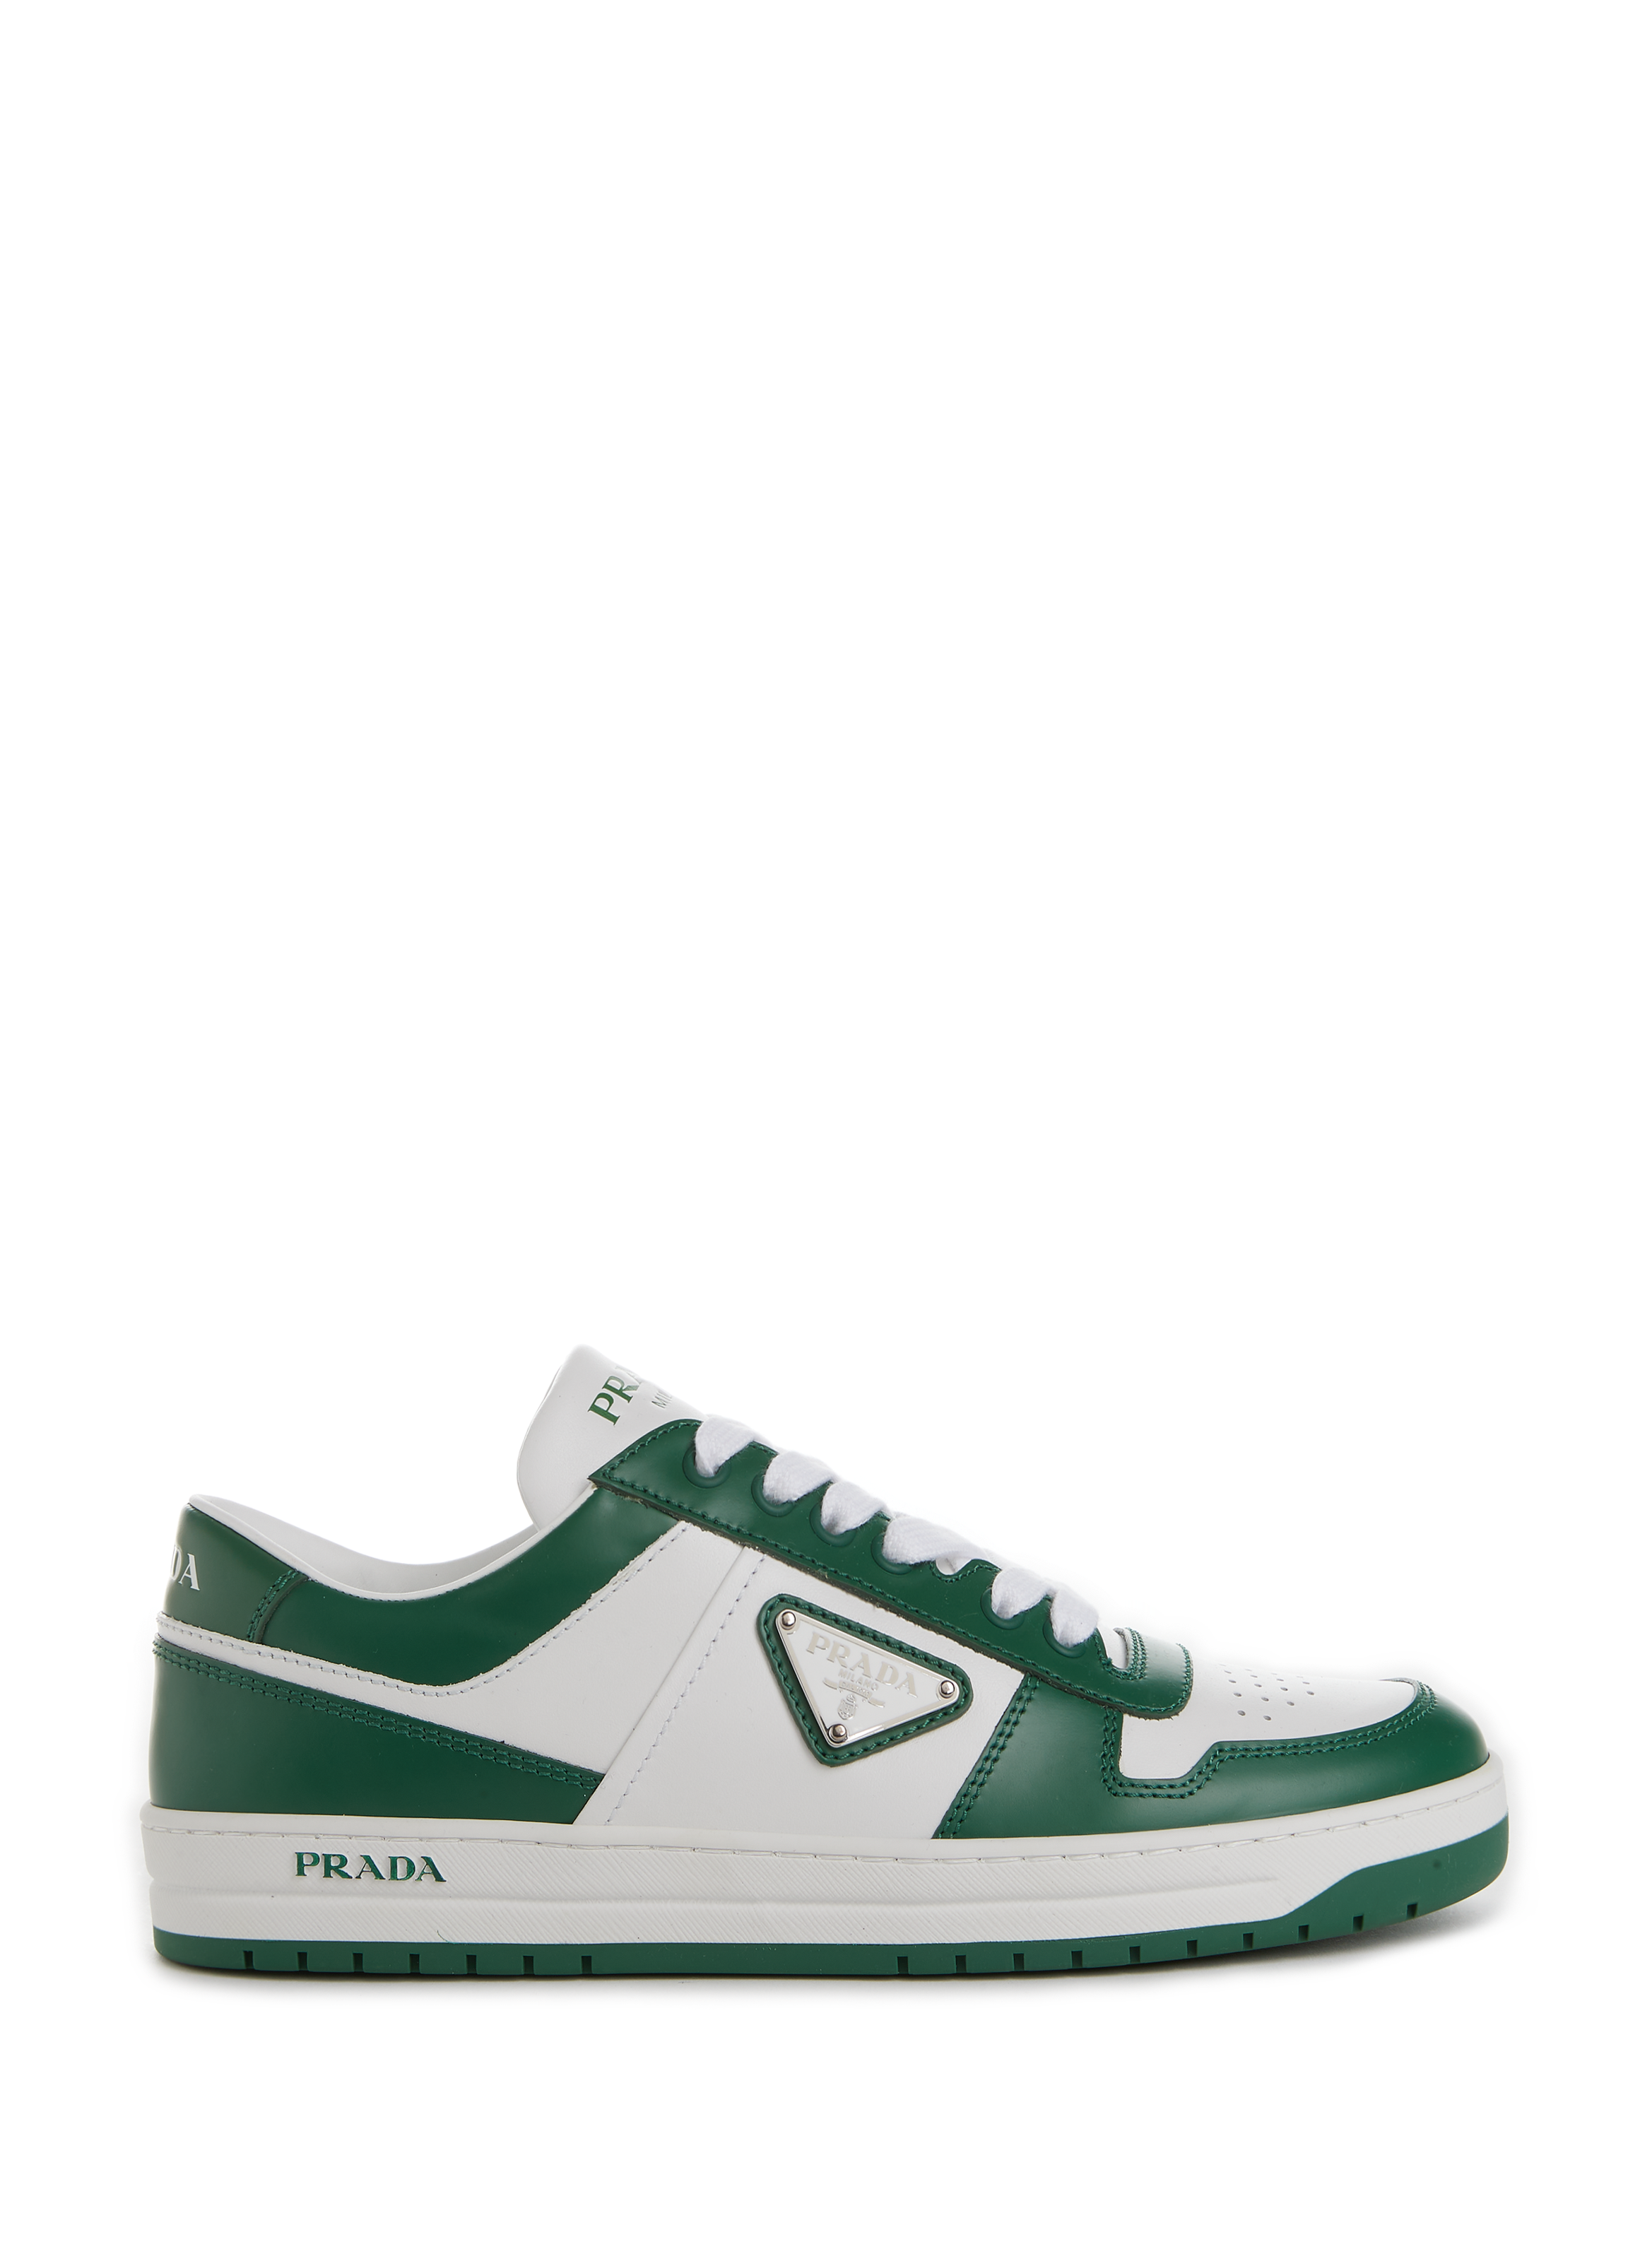 White #Prada Sneakers | Womenswear street style, Prada sneakers, Prada